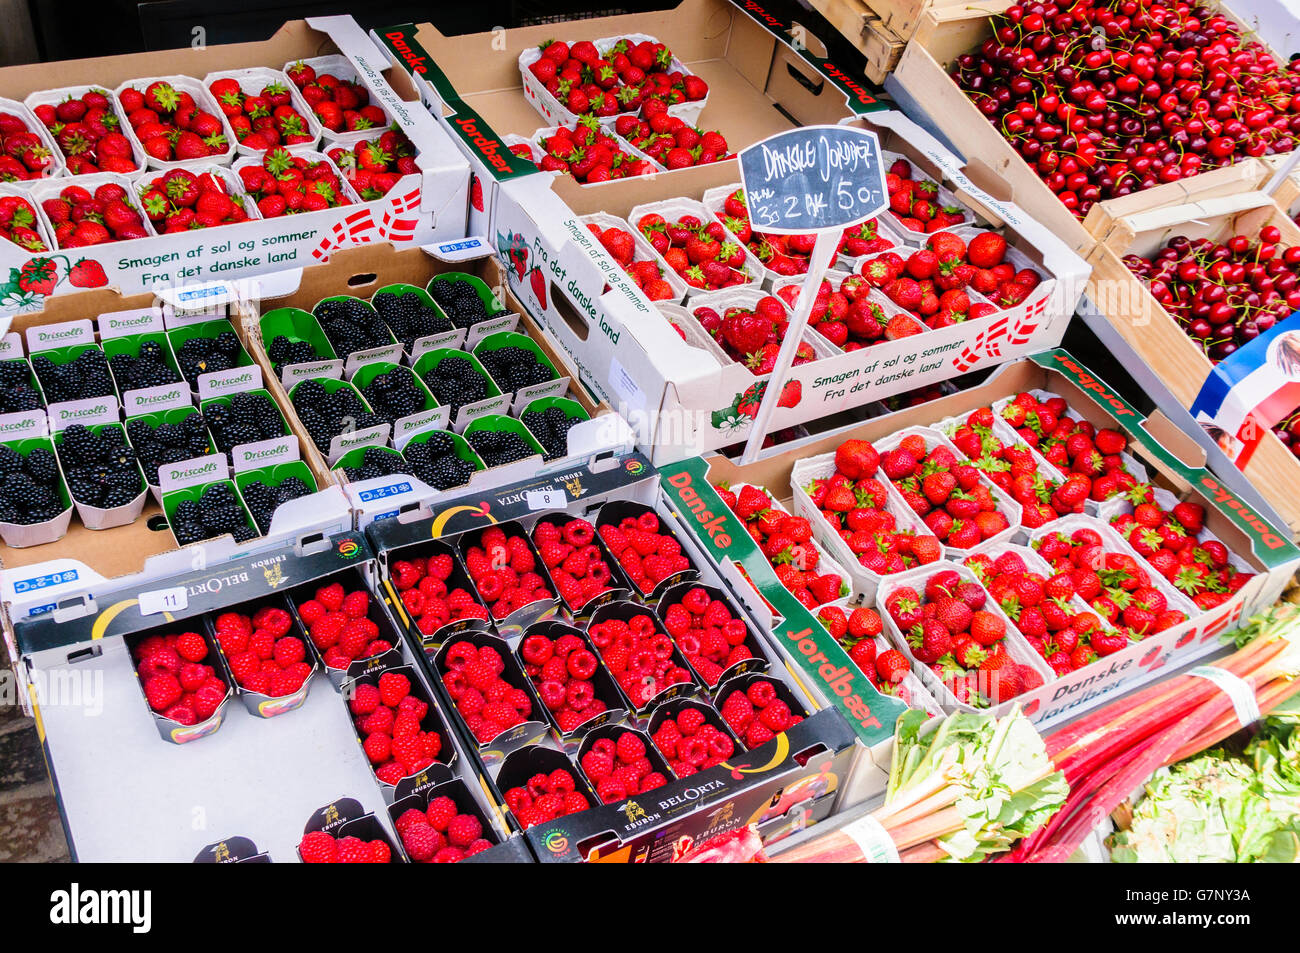 Blackberries, raspberries, strawberries and cherries for sale at a Danish market stall. Stock Photo